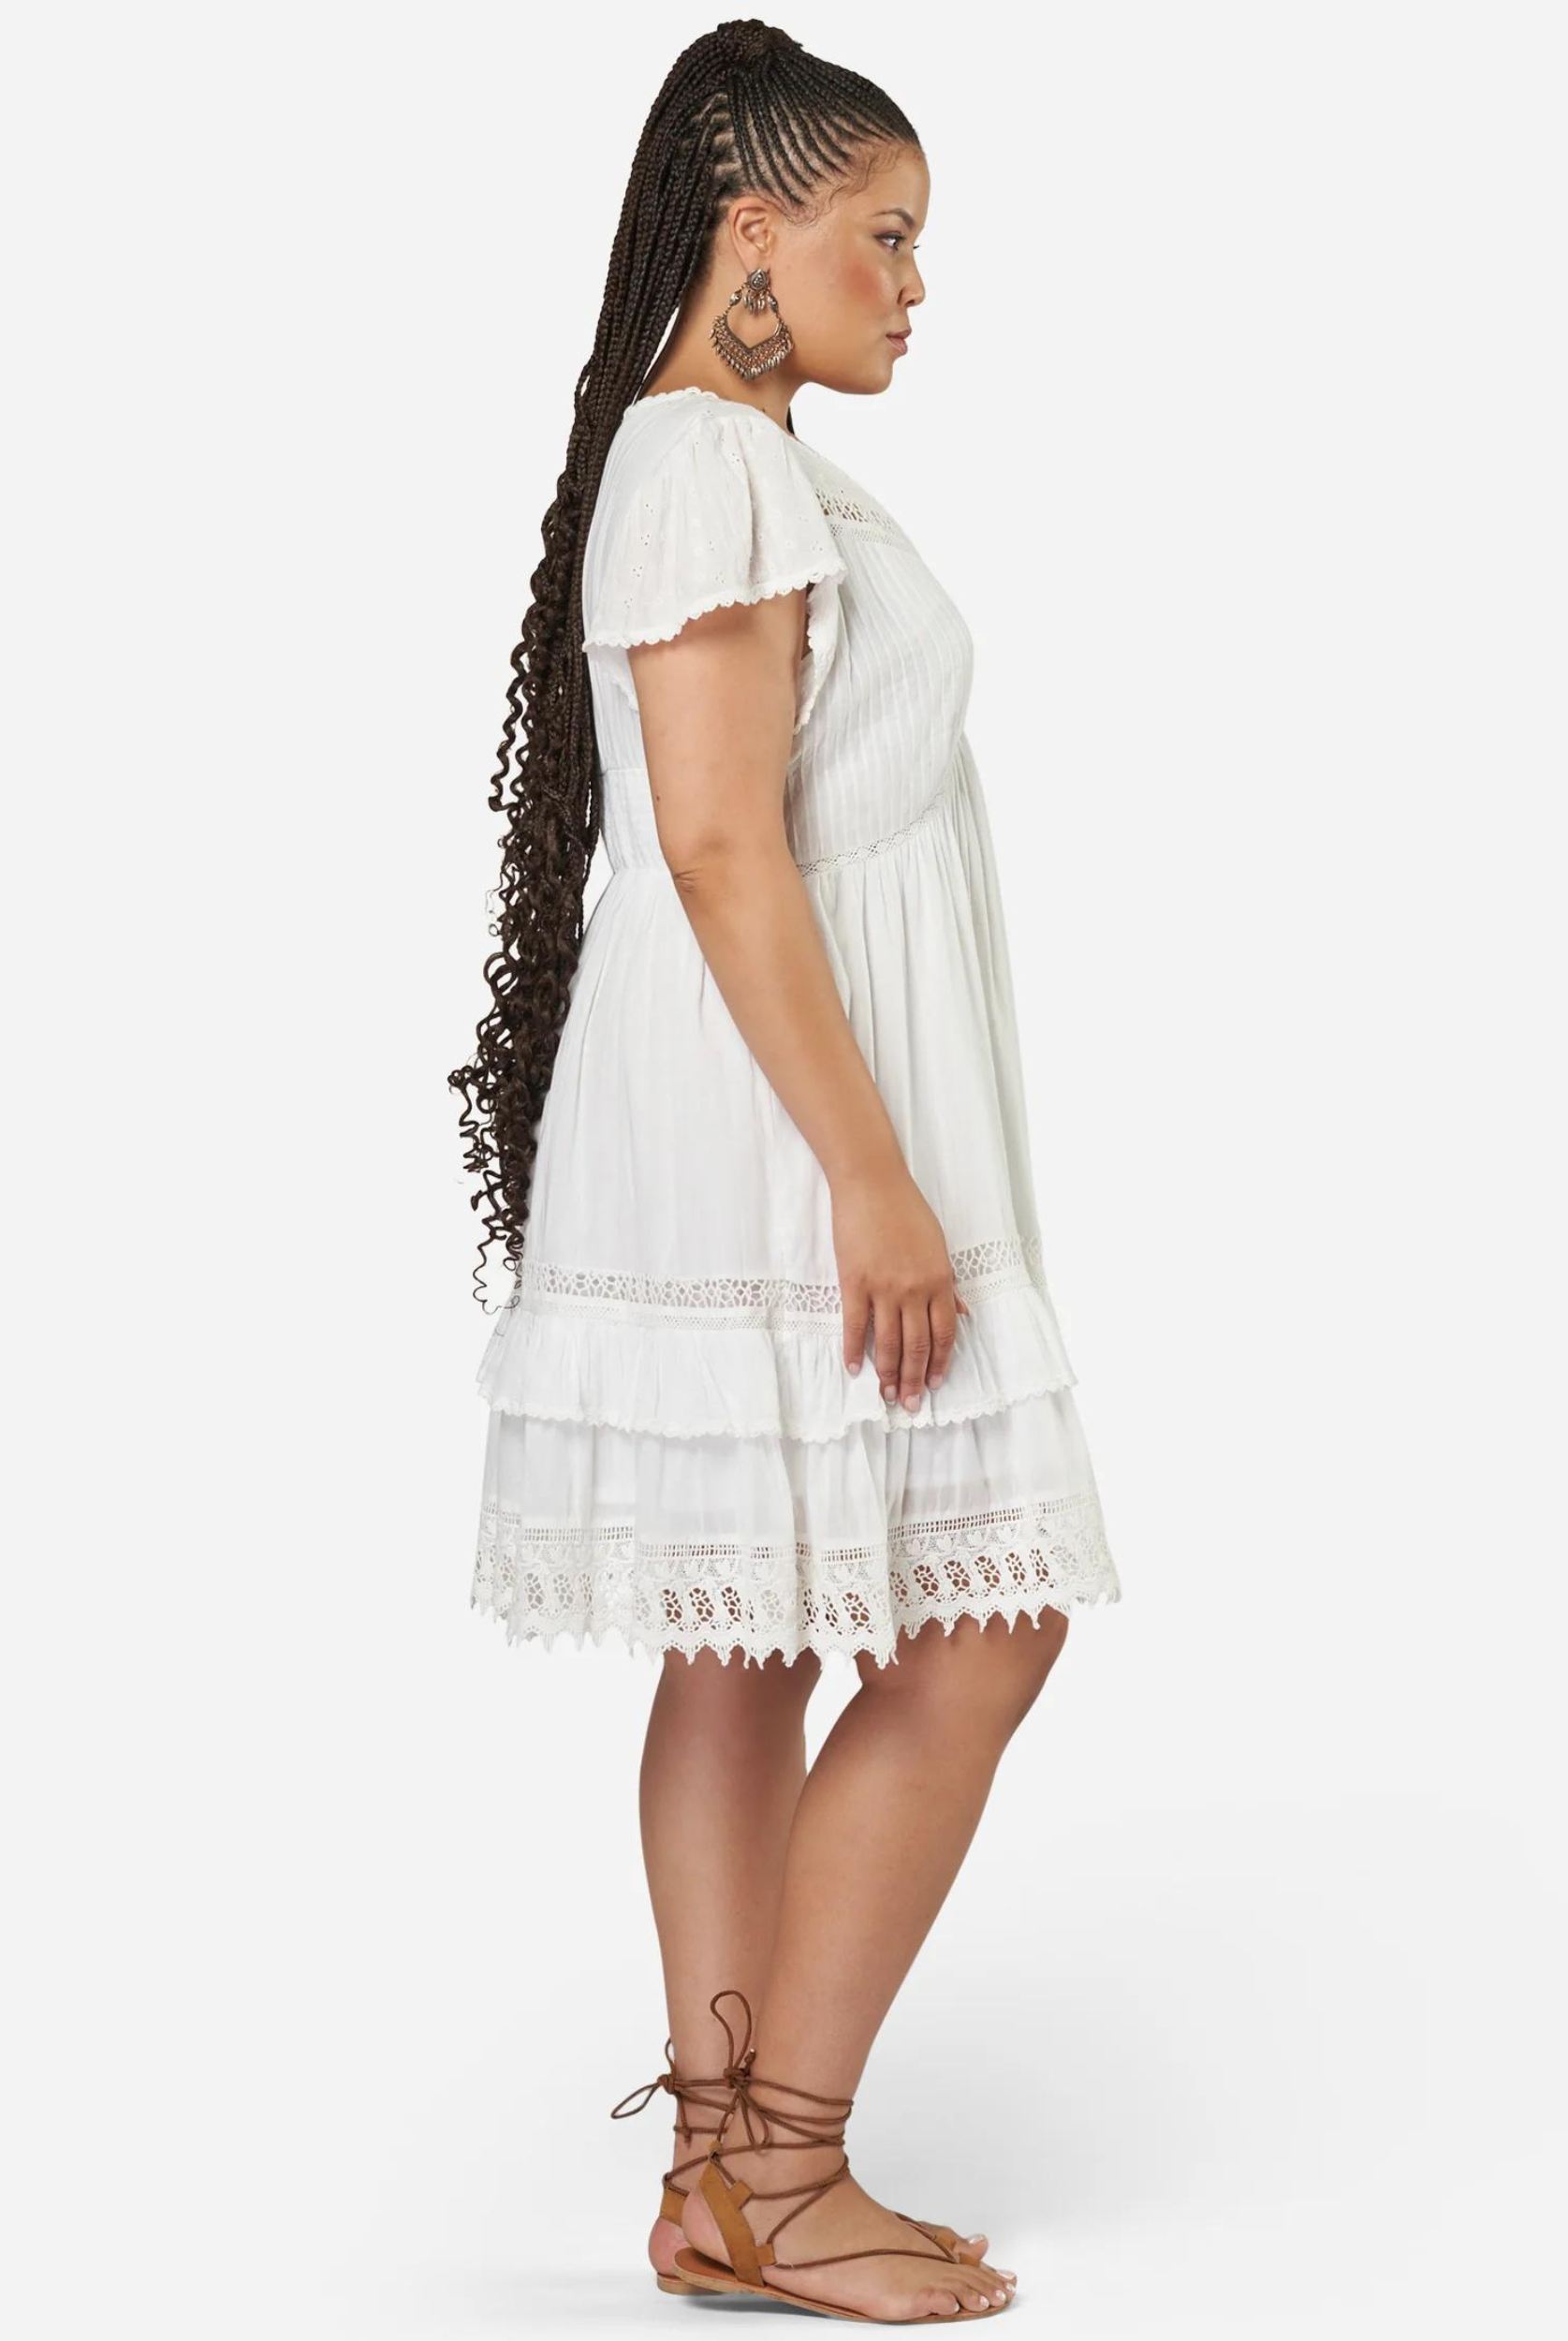 Plus sized model wearing white boho mini dress